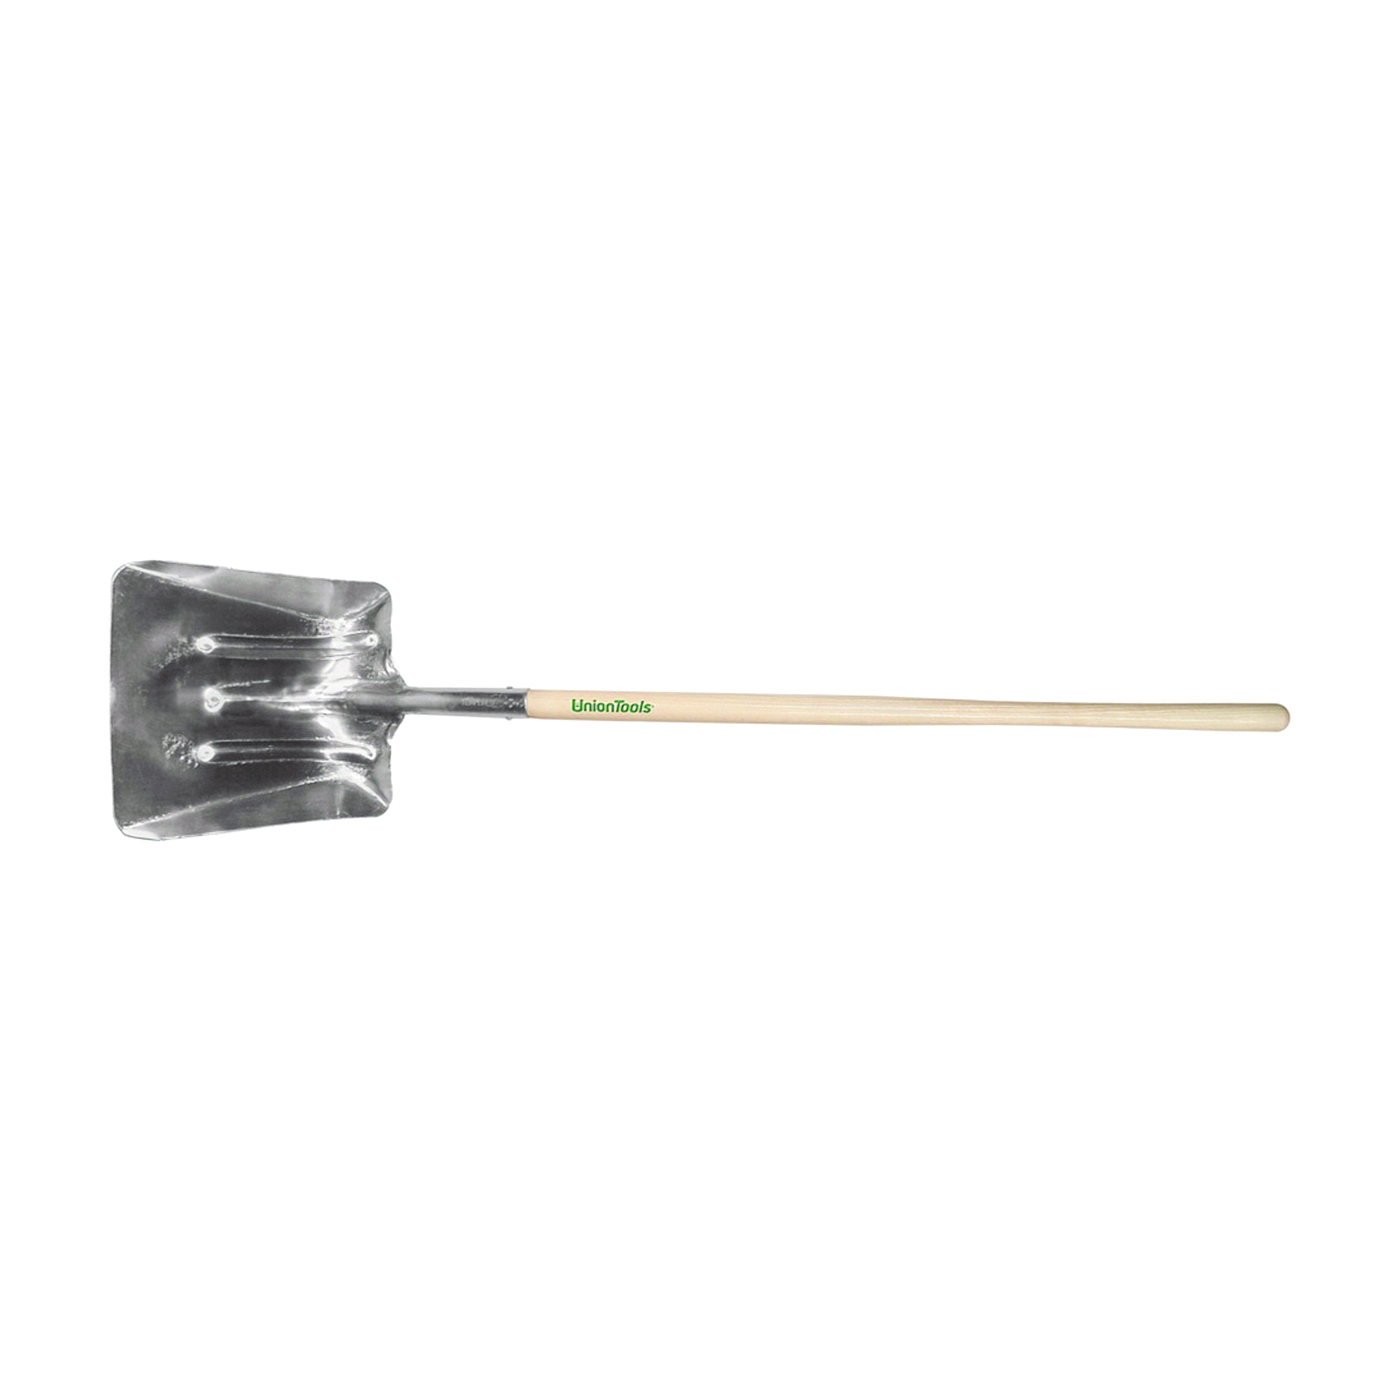 54247 Scoop Shovel, 13-1/4 in W Blade, 14-1/2 in L Blade, Aluminum Blade, North American Hardwood Handle